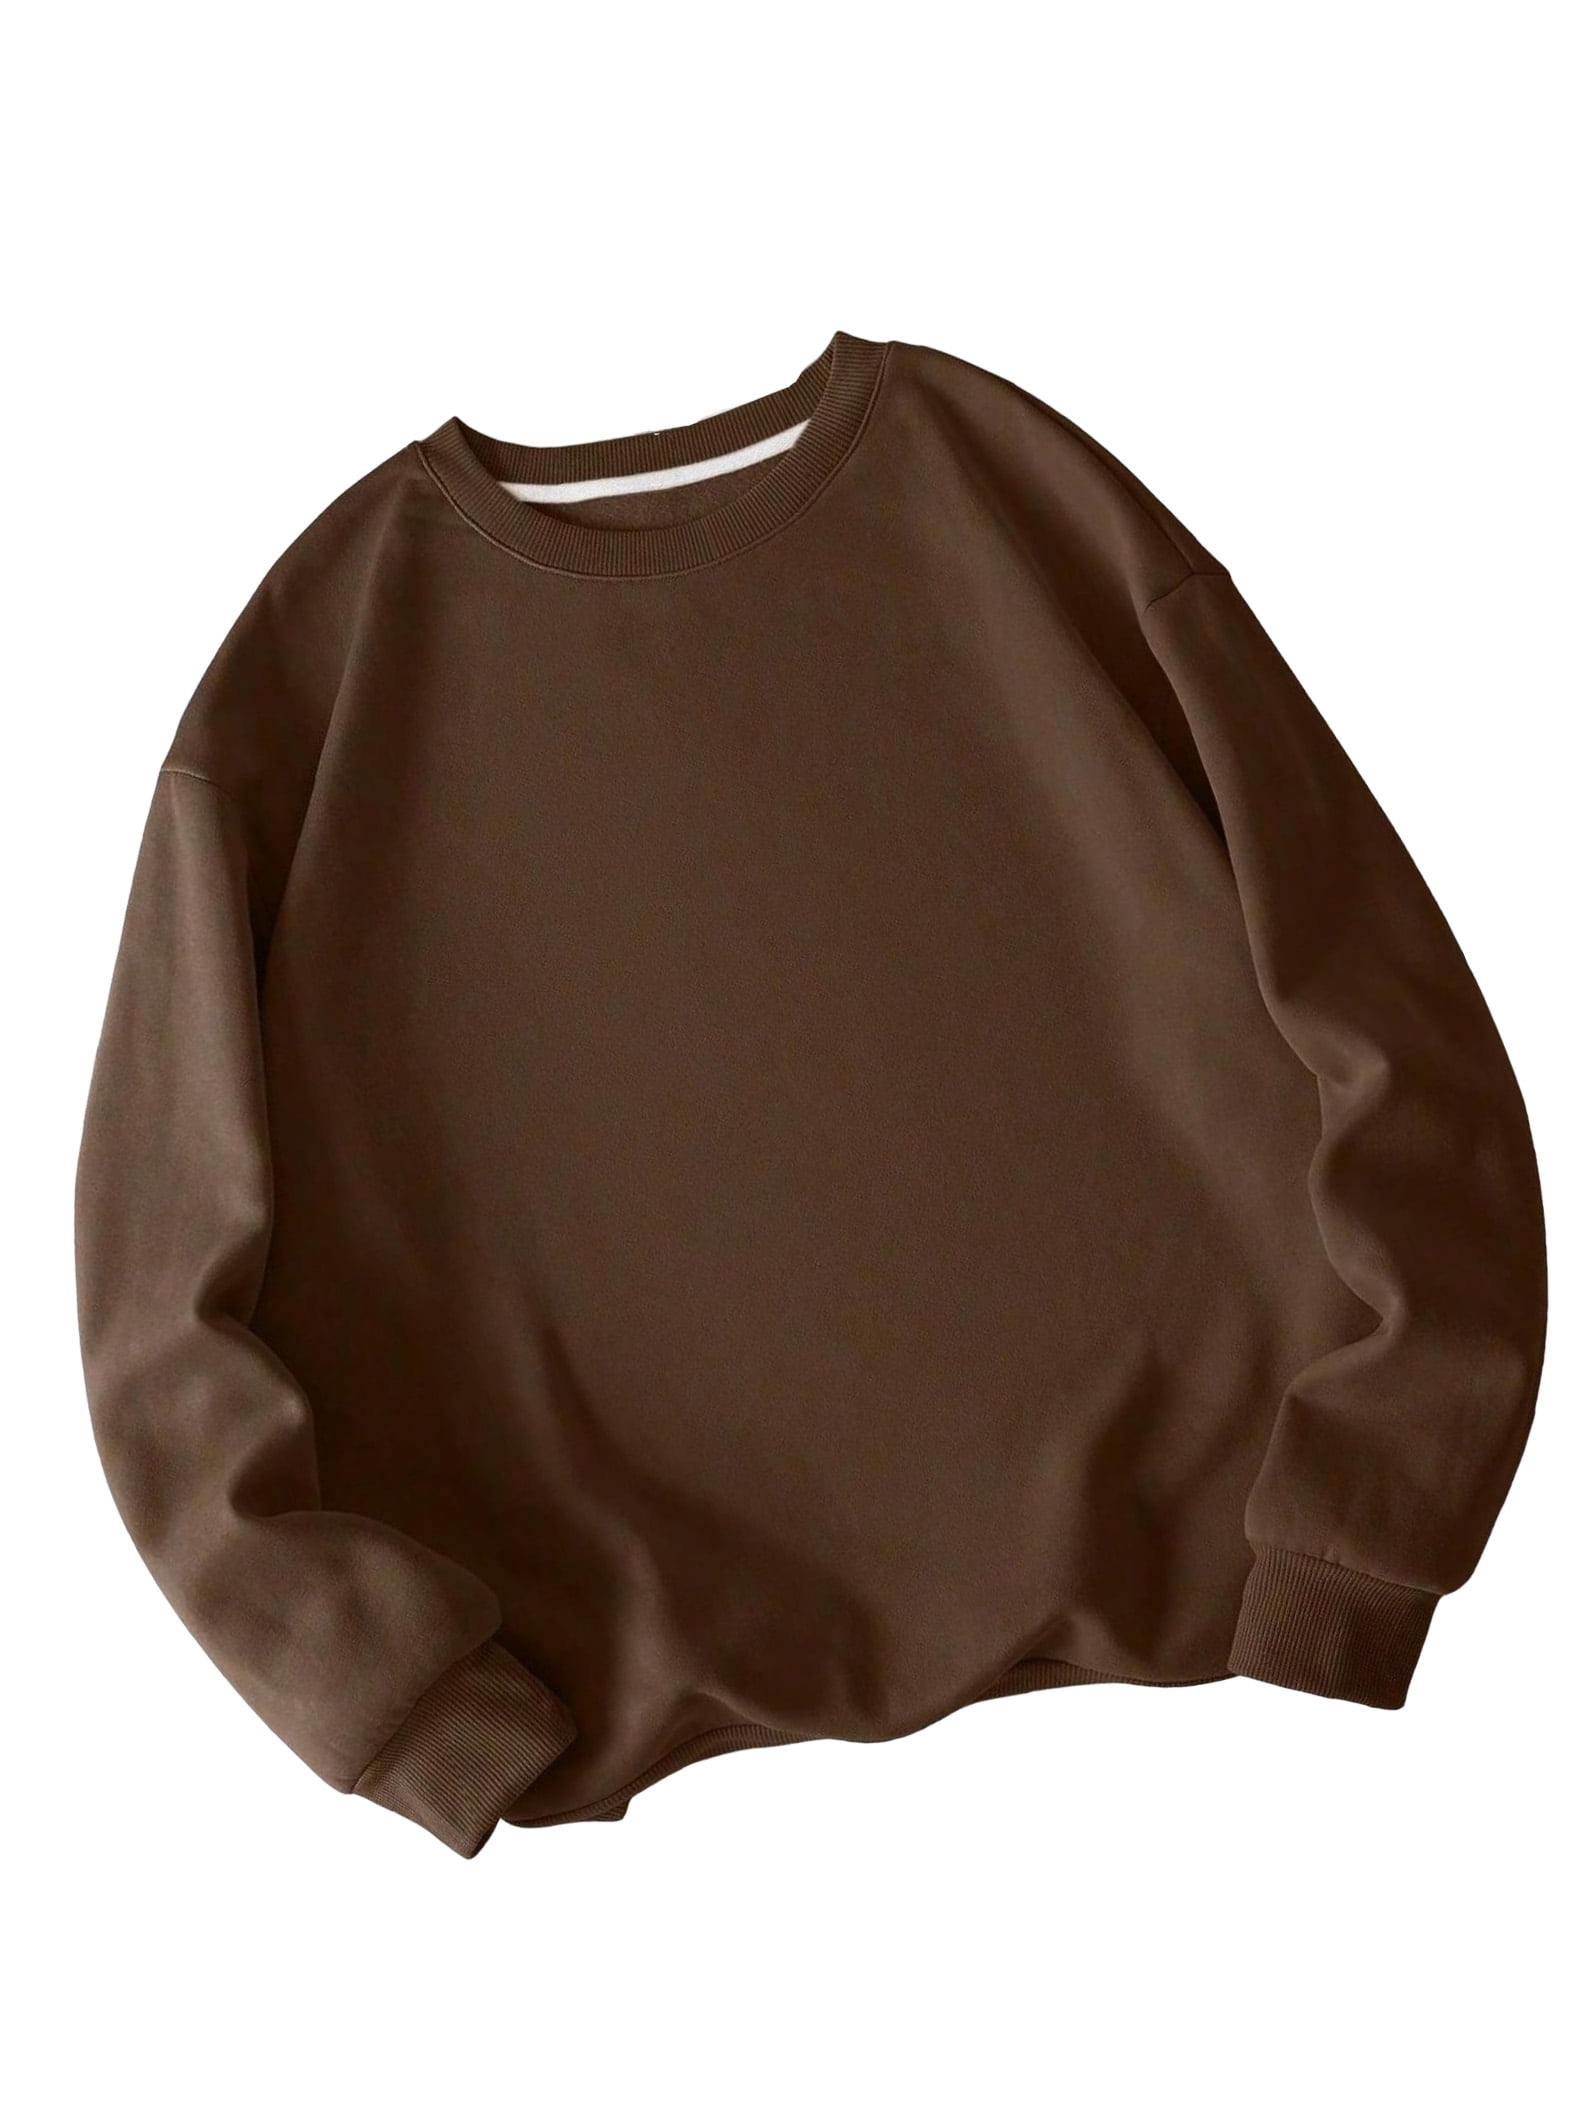 Eytino Oversized Sweatshirt for Women Plus Size Sweatshirts Long Sleeve  Crew Neck Casual Soft Pullover Tops Shirts 3X Brown 